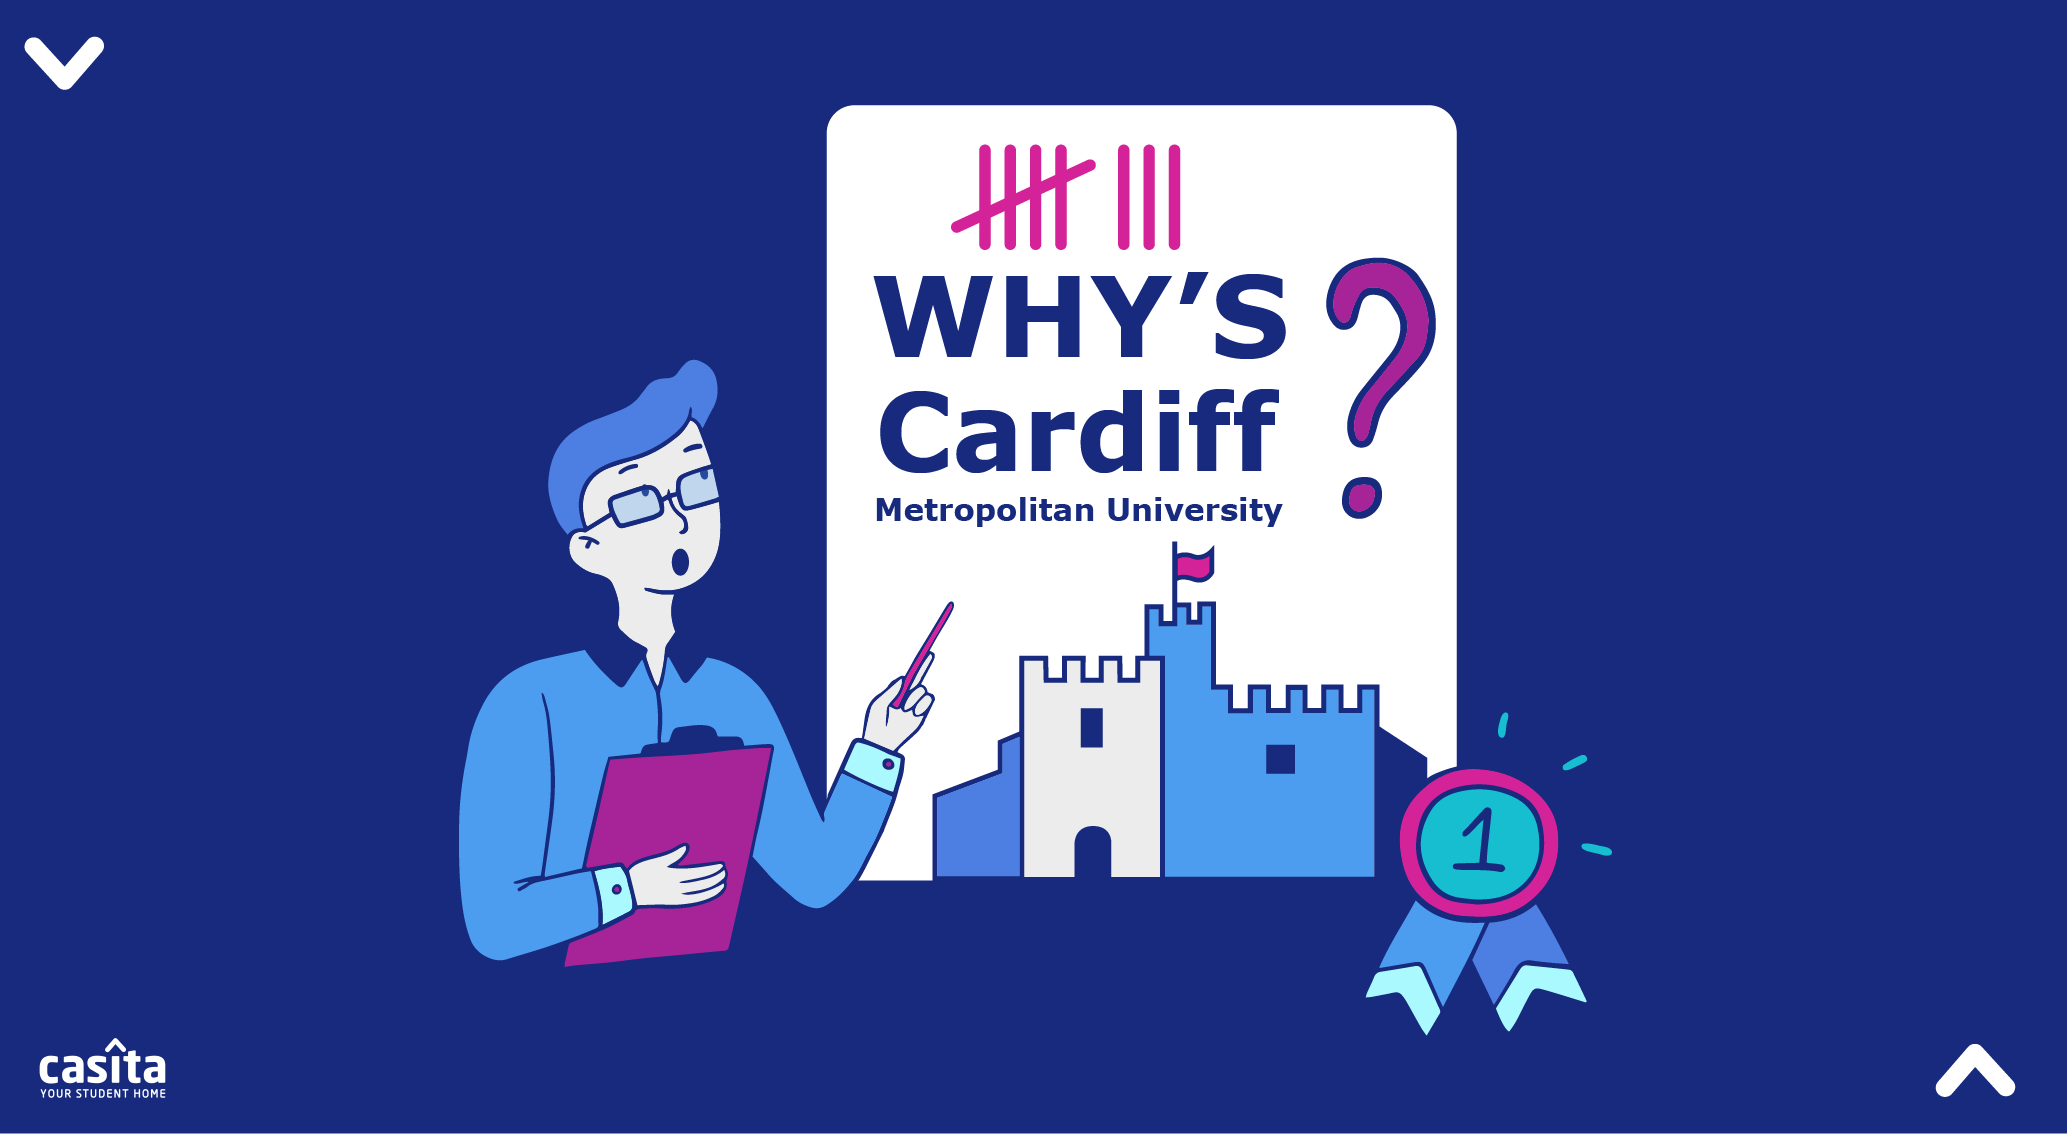 Why Study at Cardiff Metropolitan University